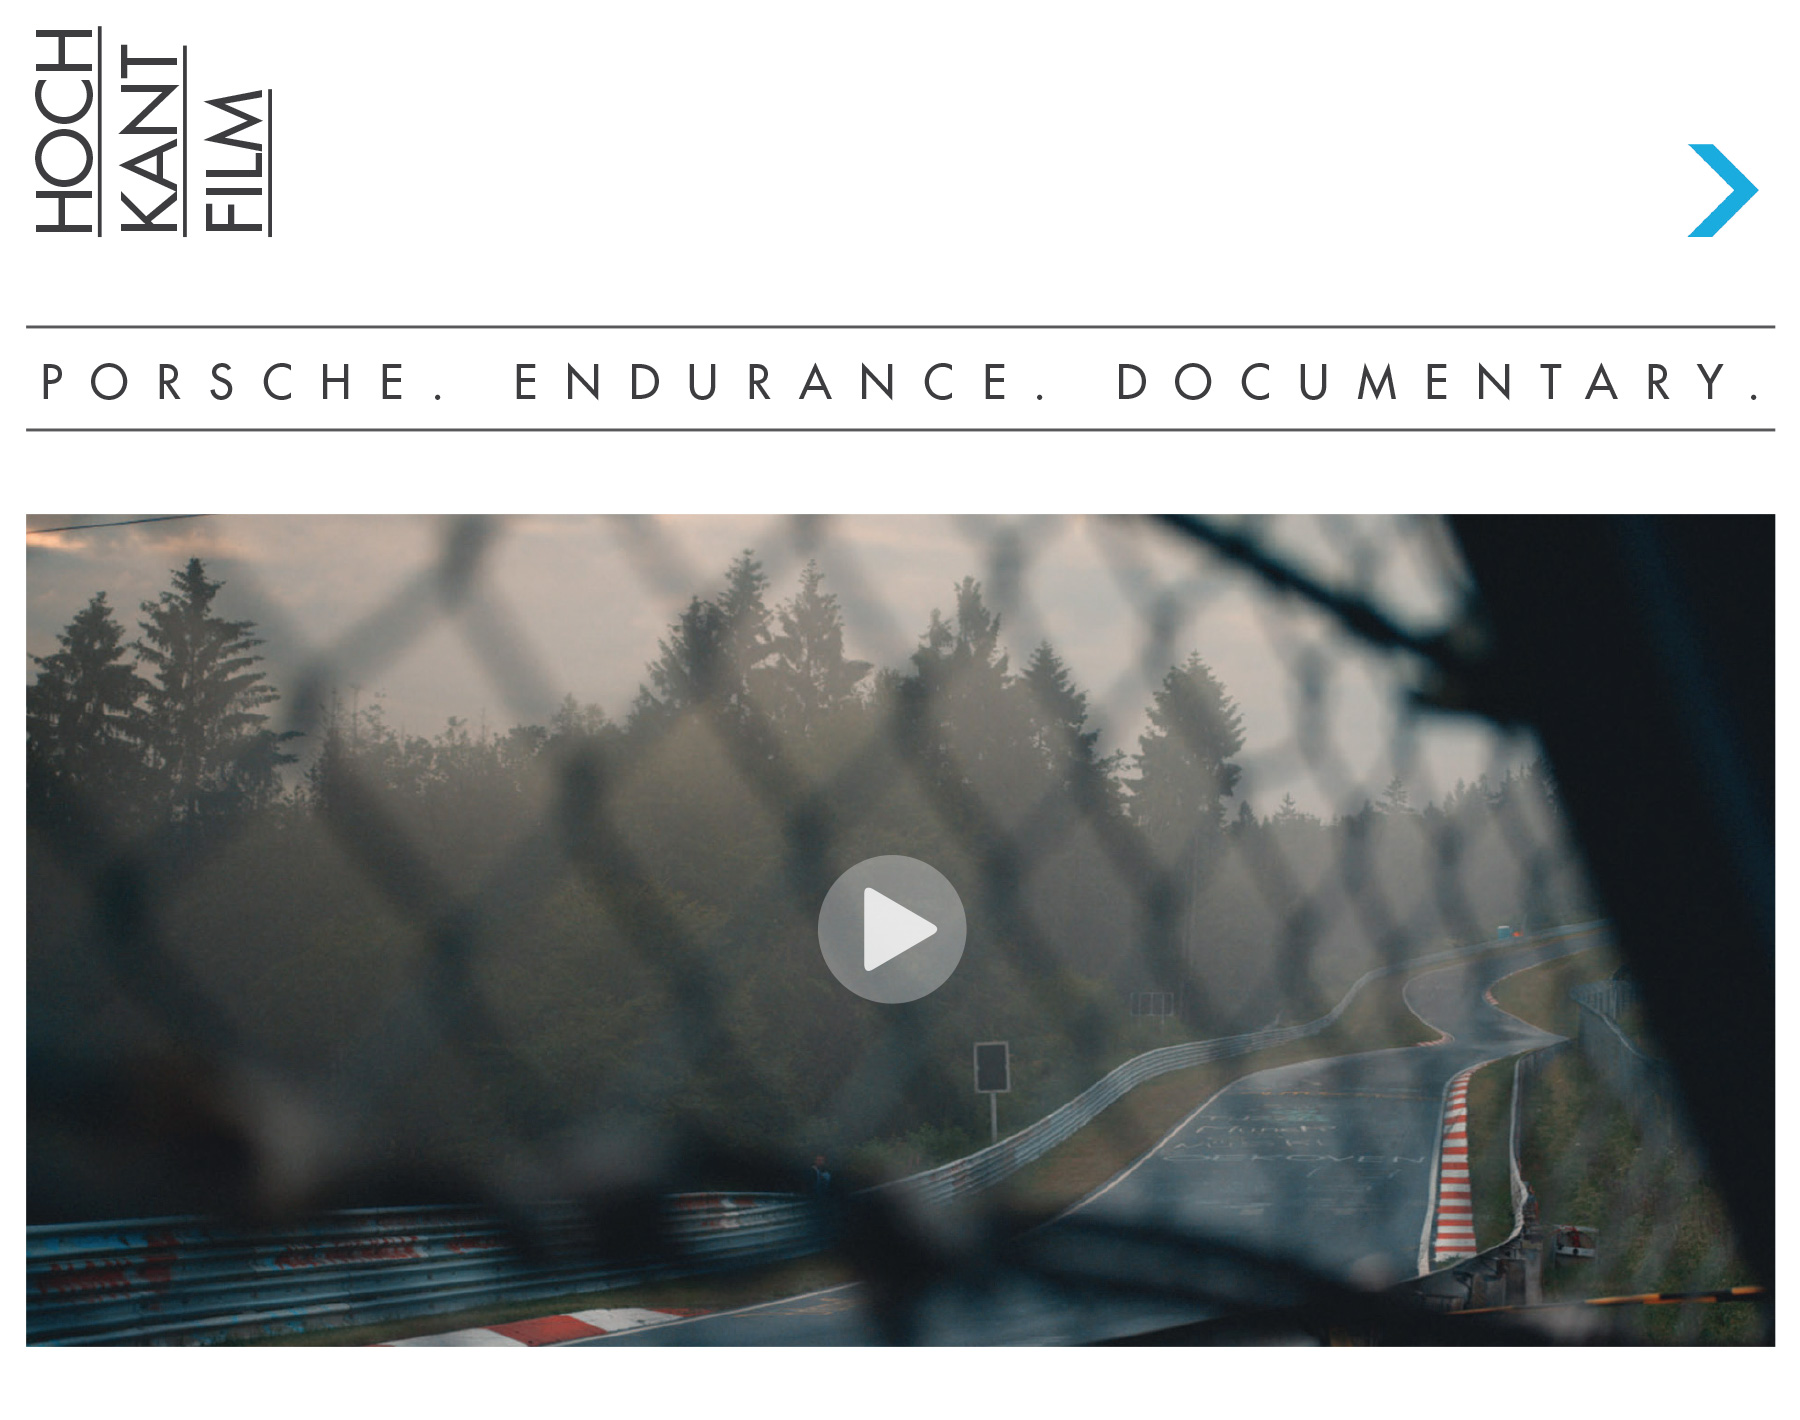 Porsche. Endurance. Documentary.